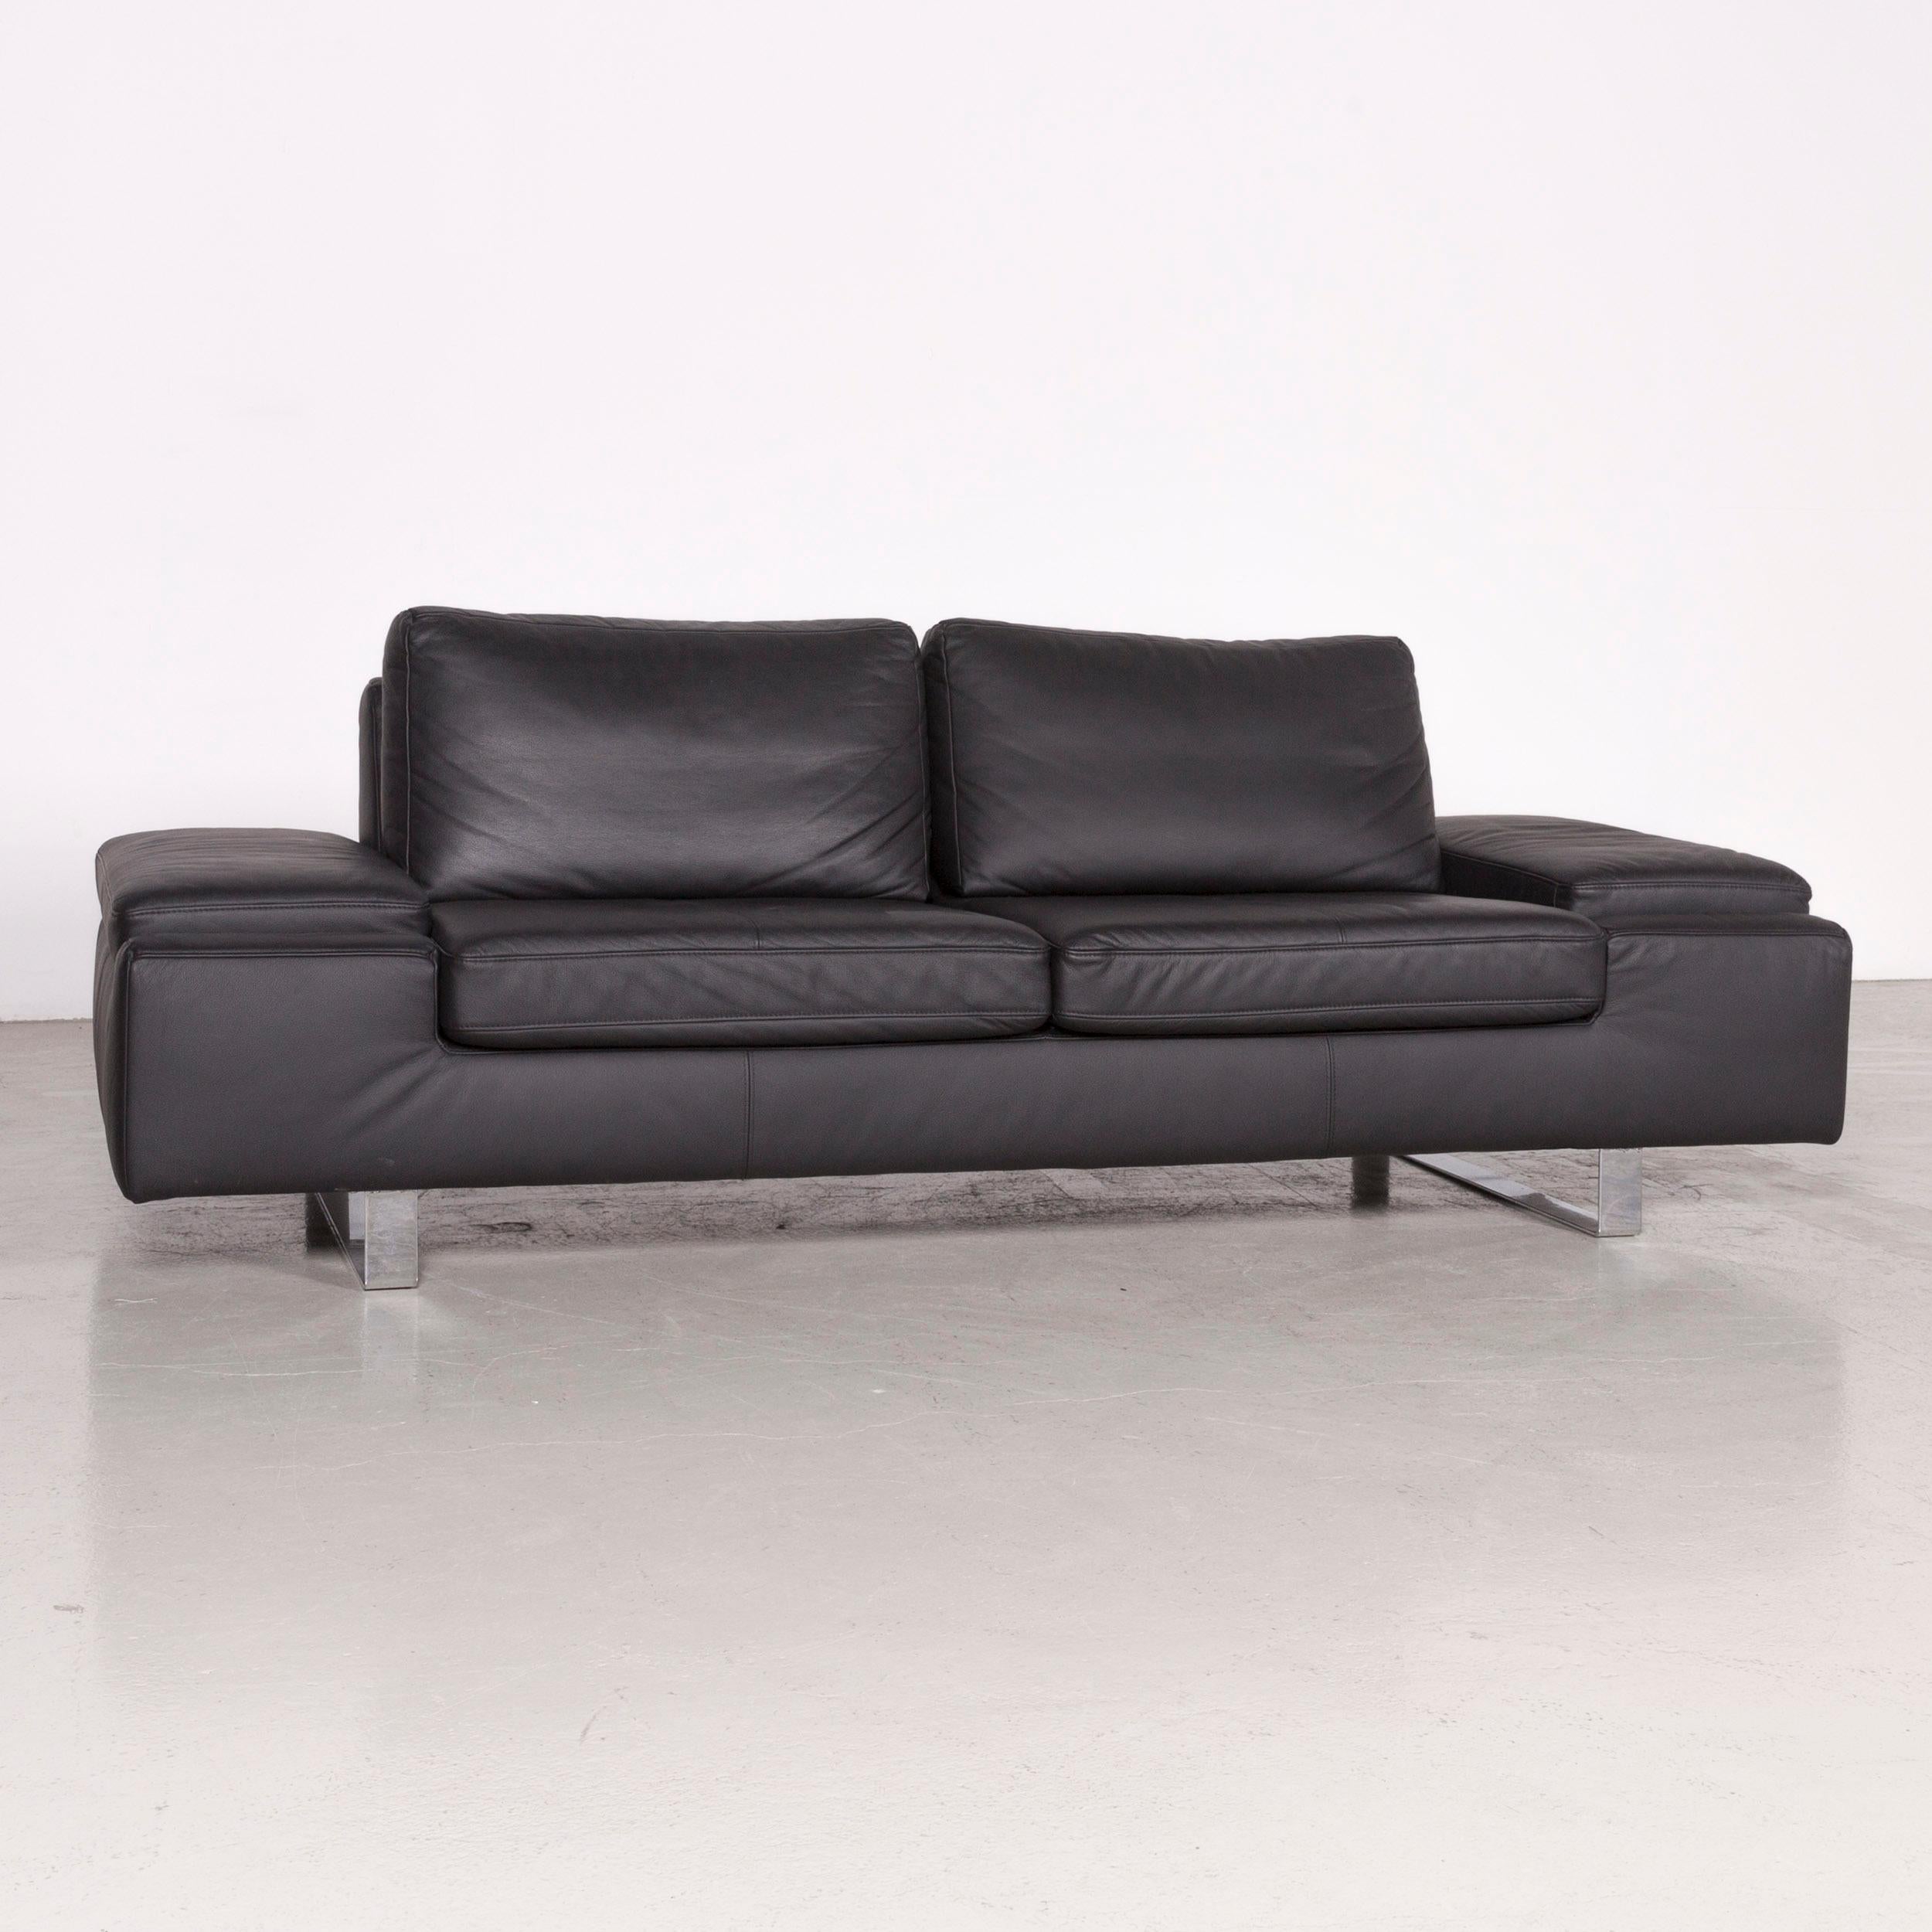 Arte M Designer Leather Sofa Black Three-Seat Couch Modern In Good Condition For Sale In Cologne, DE